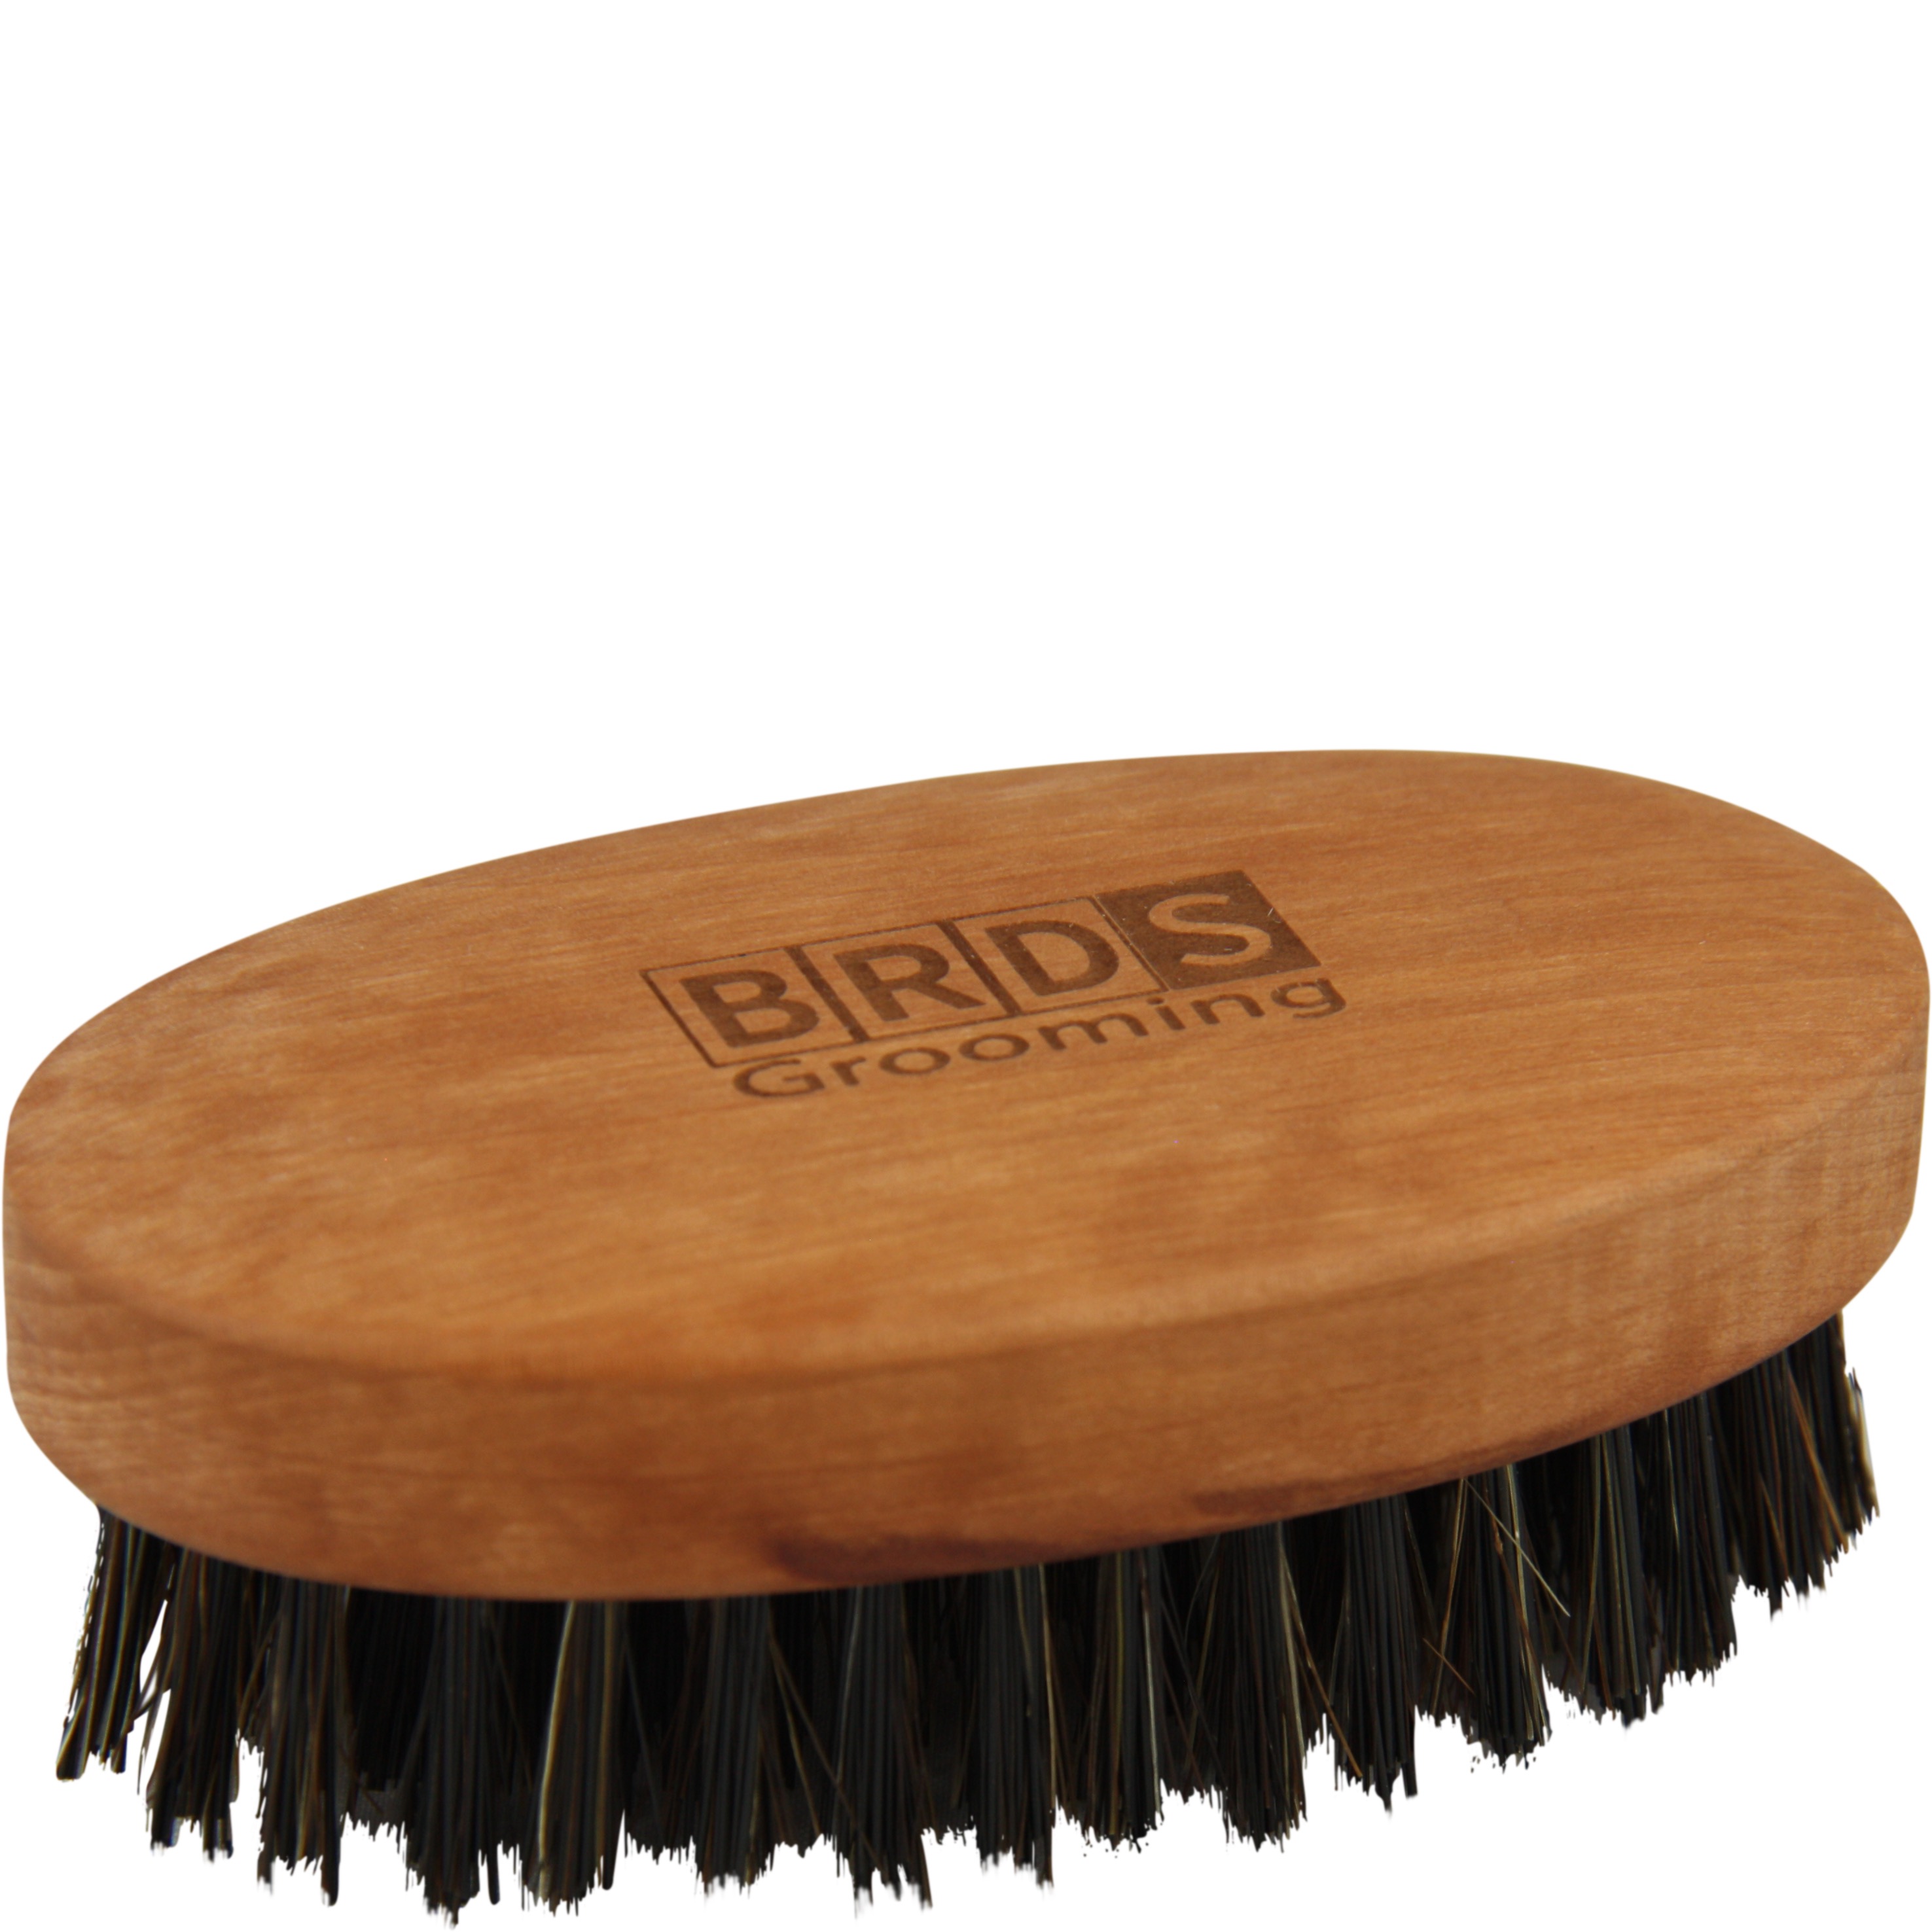 Beards Grooming Baardborstel Medium Nylon Paard - 1.1 - BG-03025